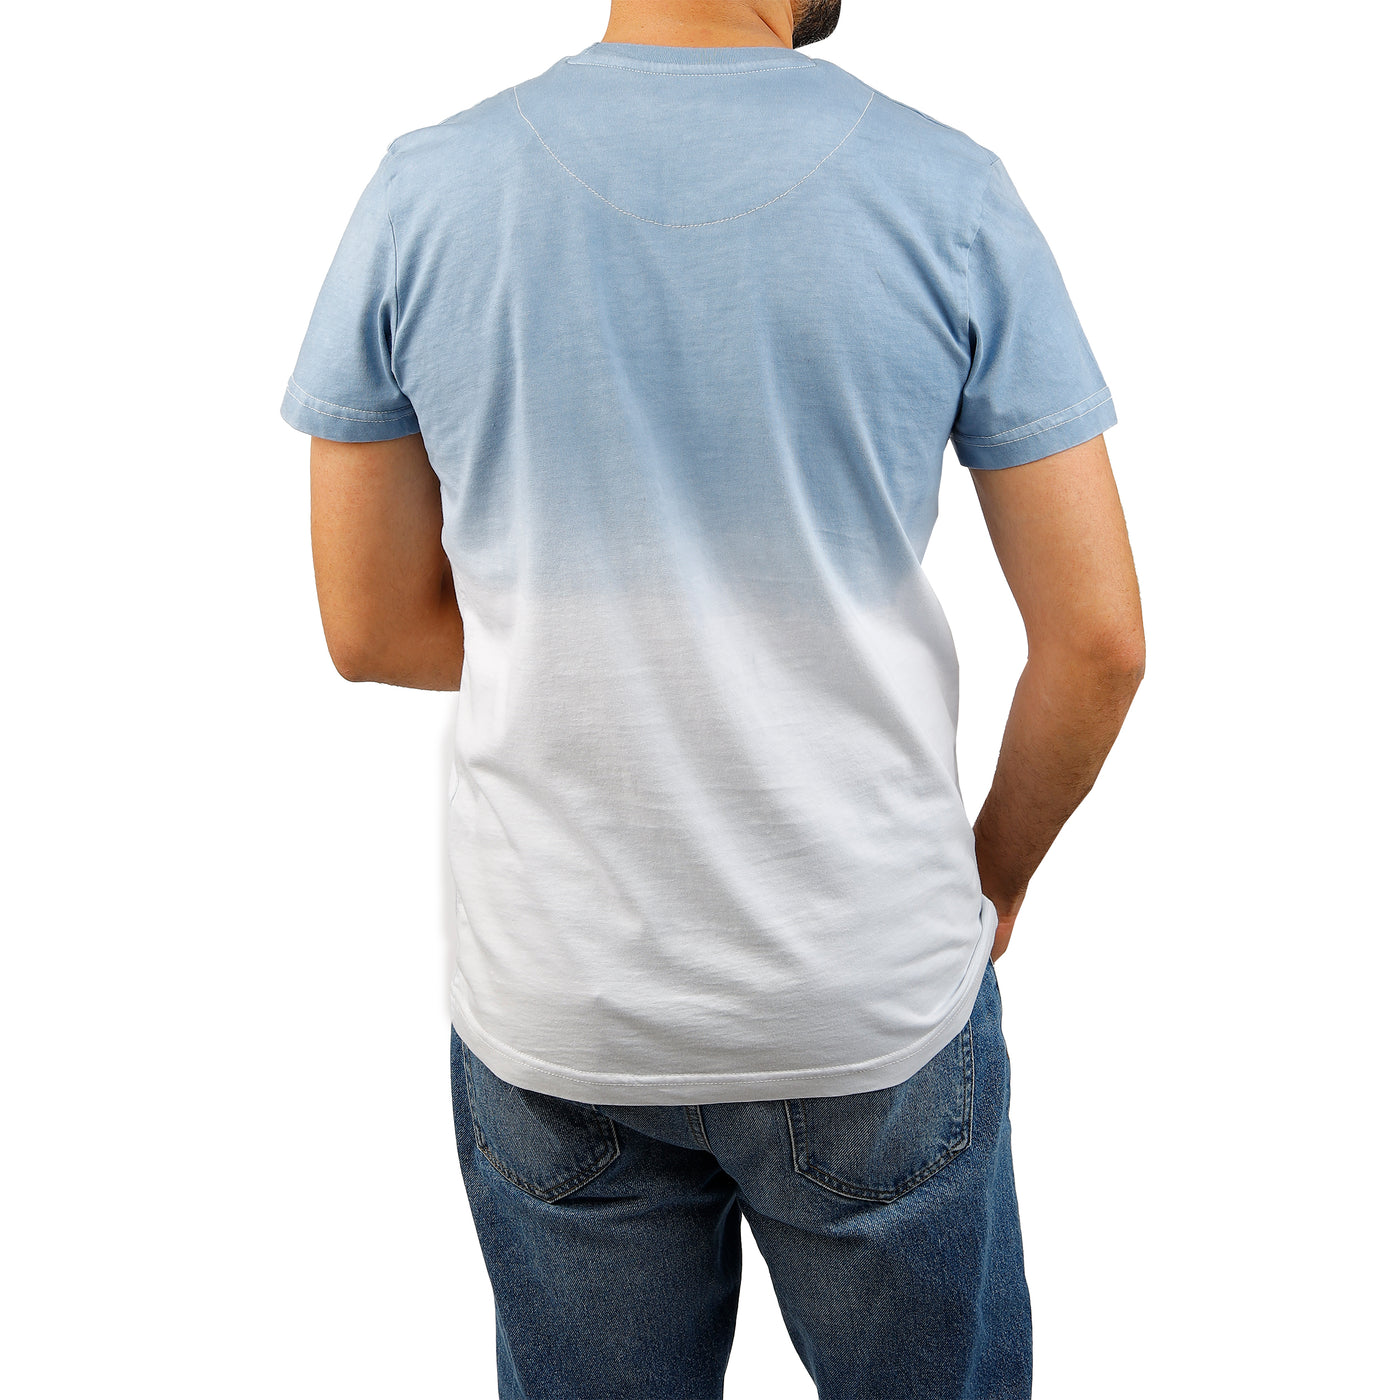 Light-Blue round T-shirt